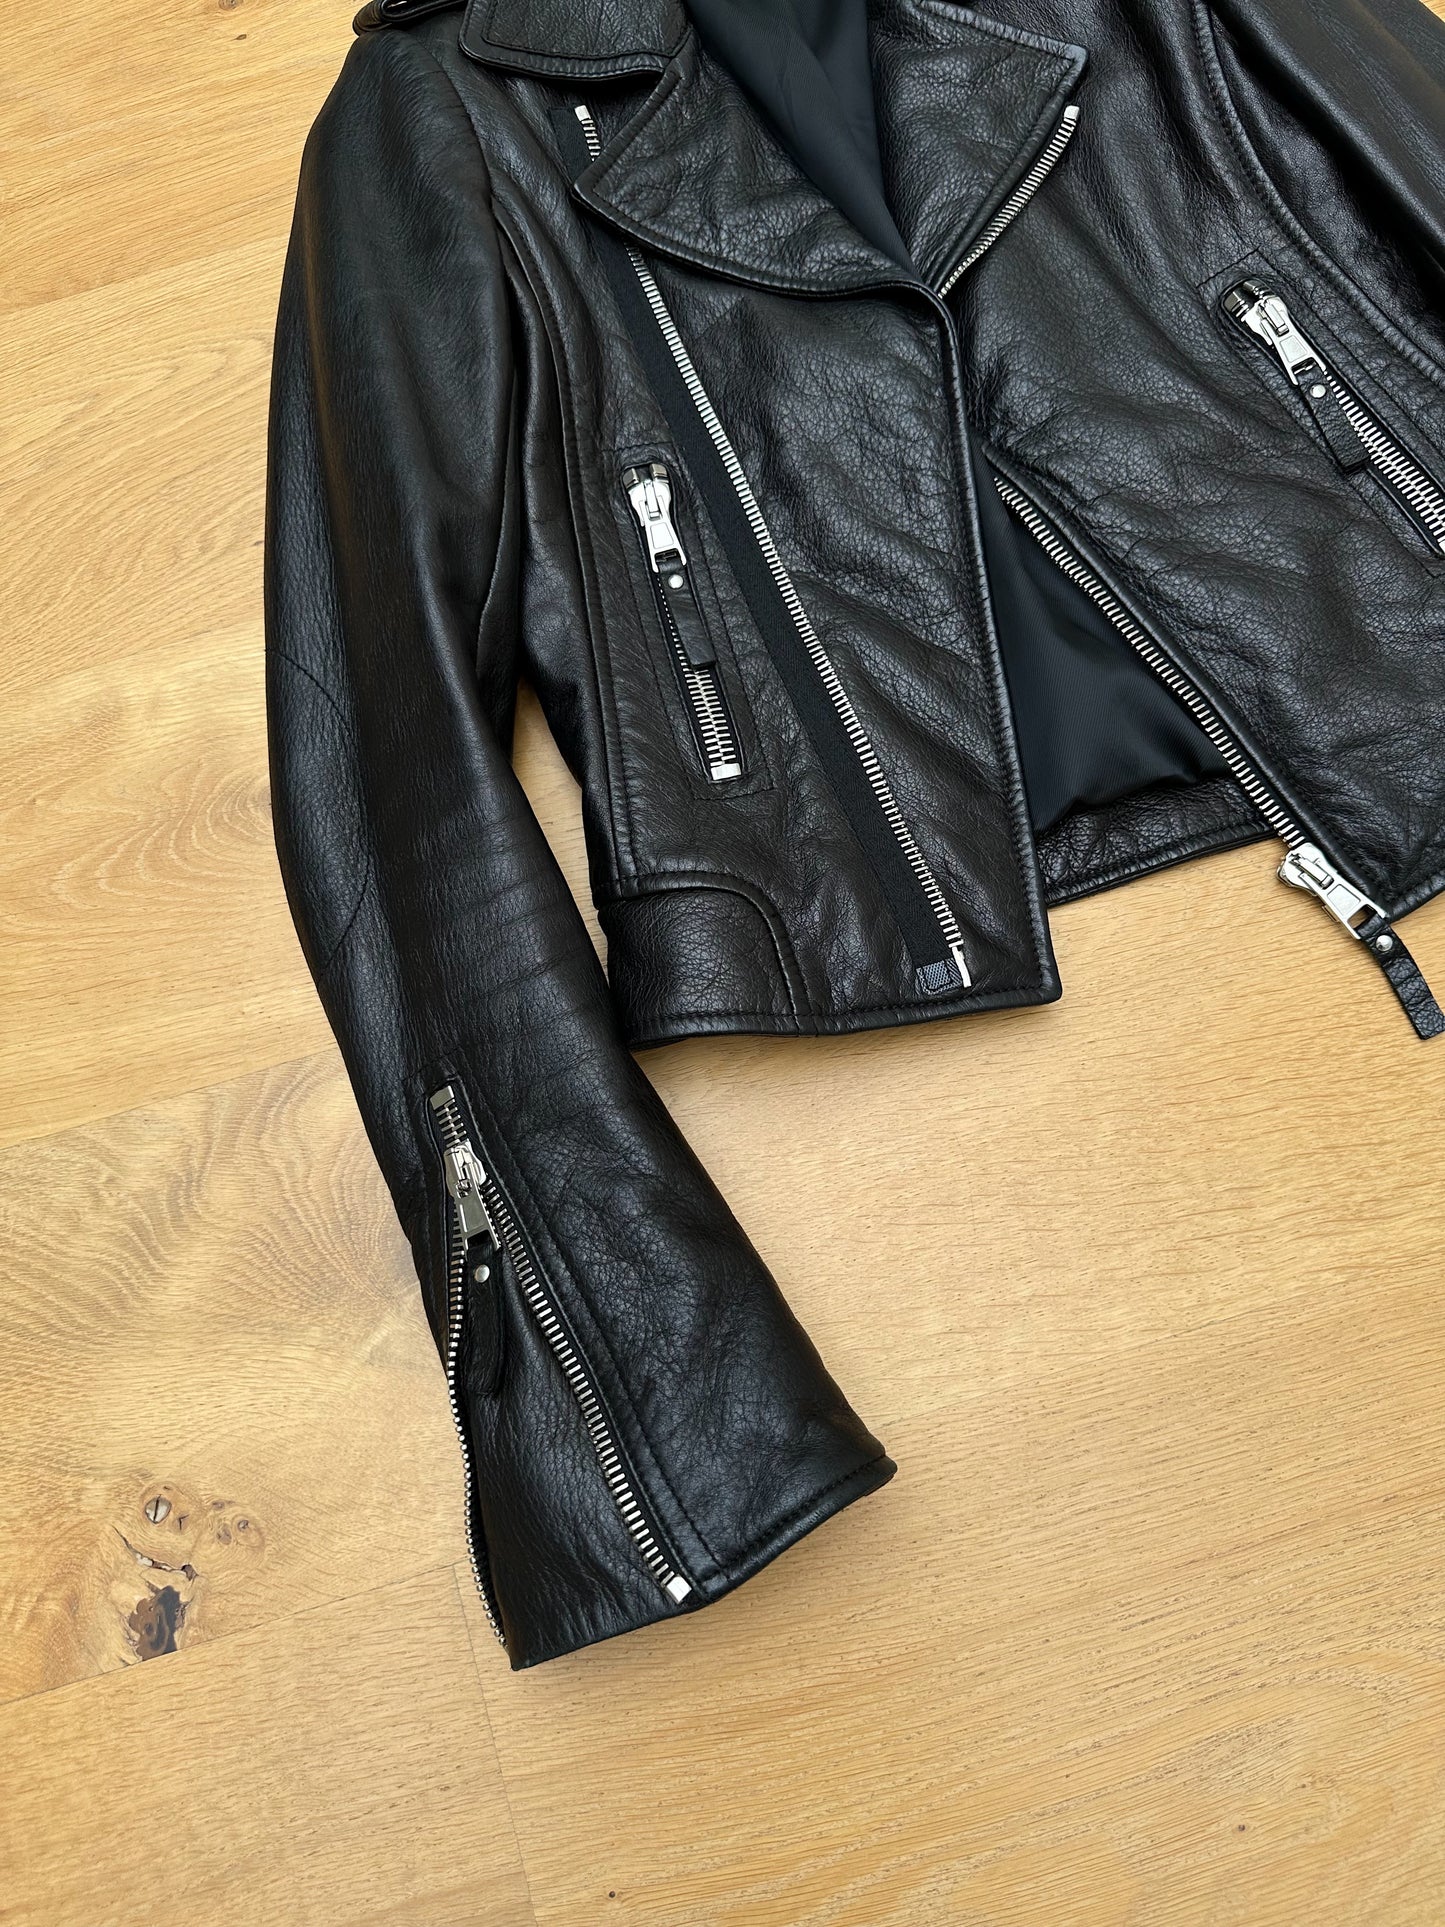 BALENCIAGA leather biker jacket